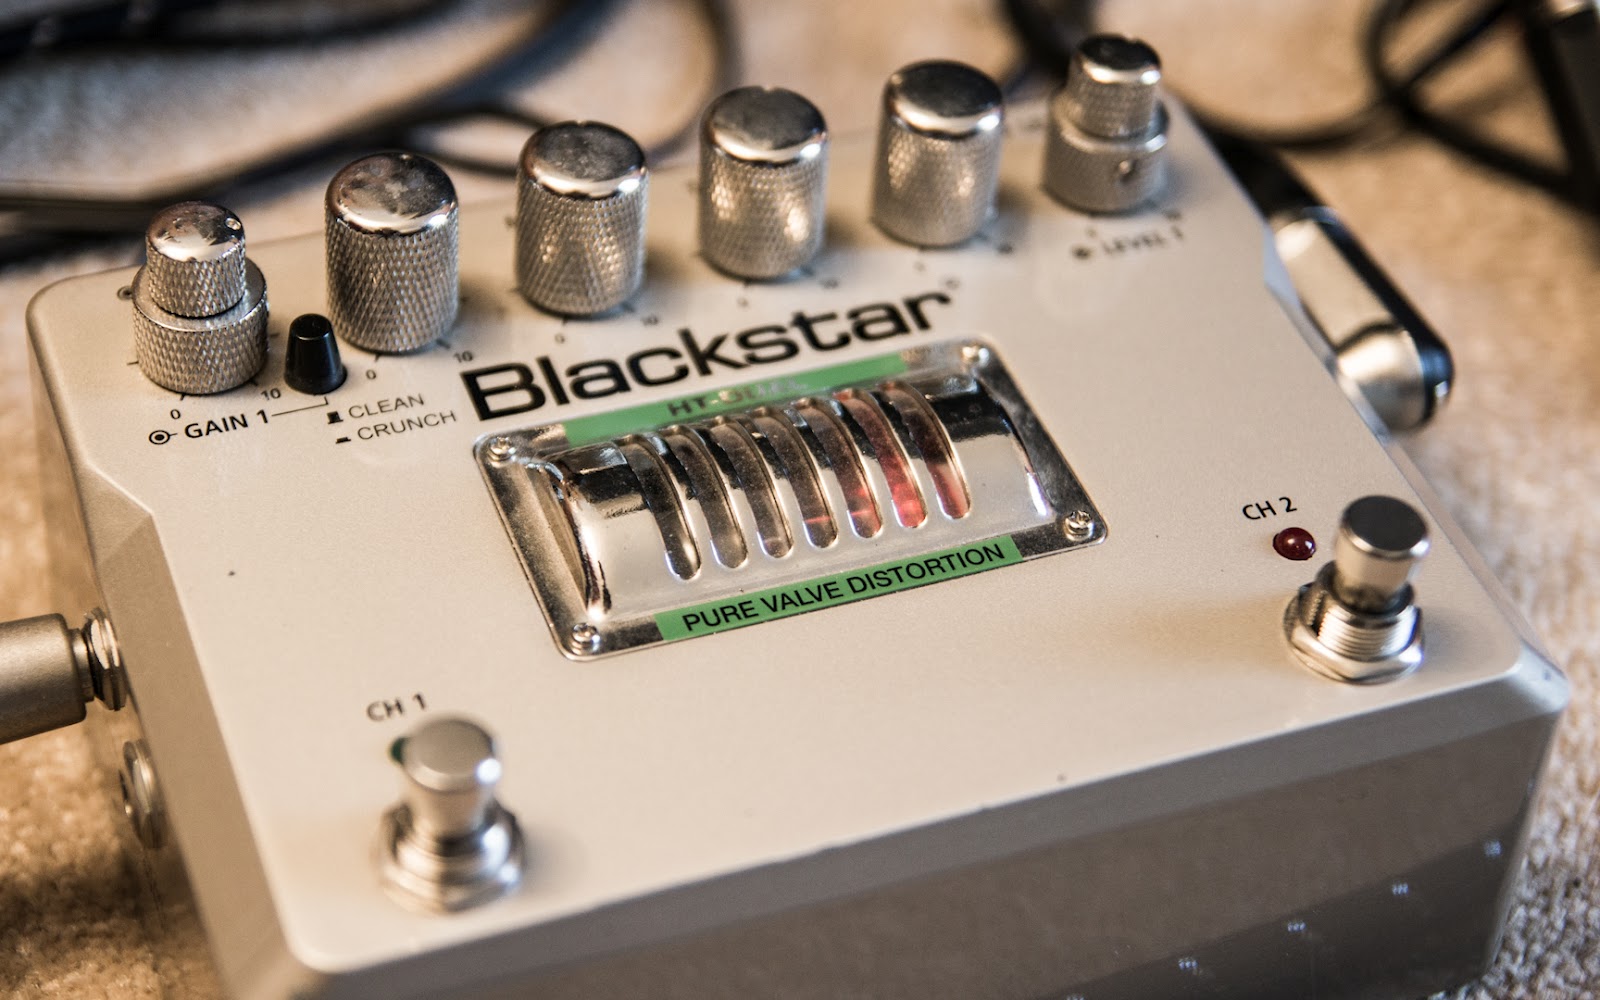 De andere dag Wetland soort SOUND > VIDEO: Gear Review: Blackstar HT Dual "Pure Valve Distortion" pedal